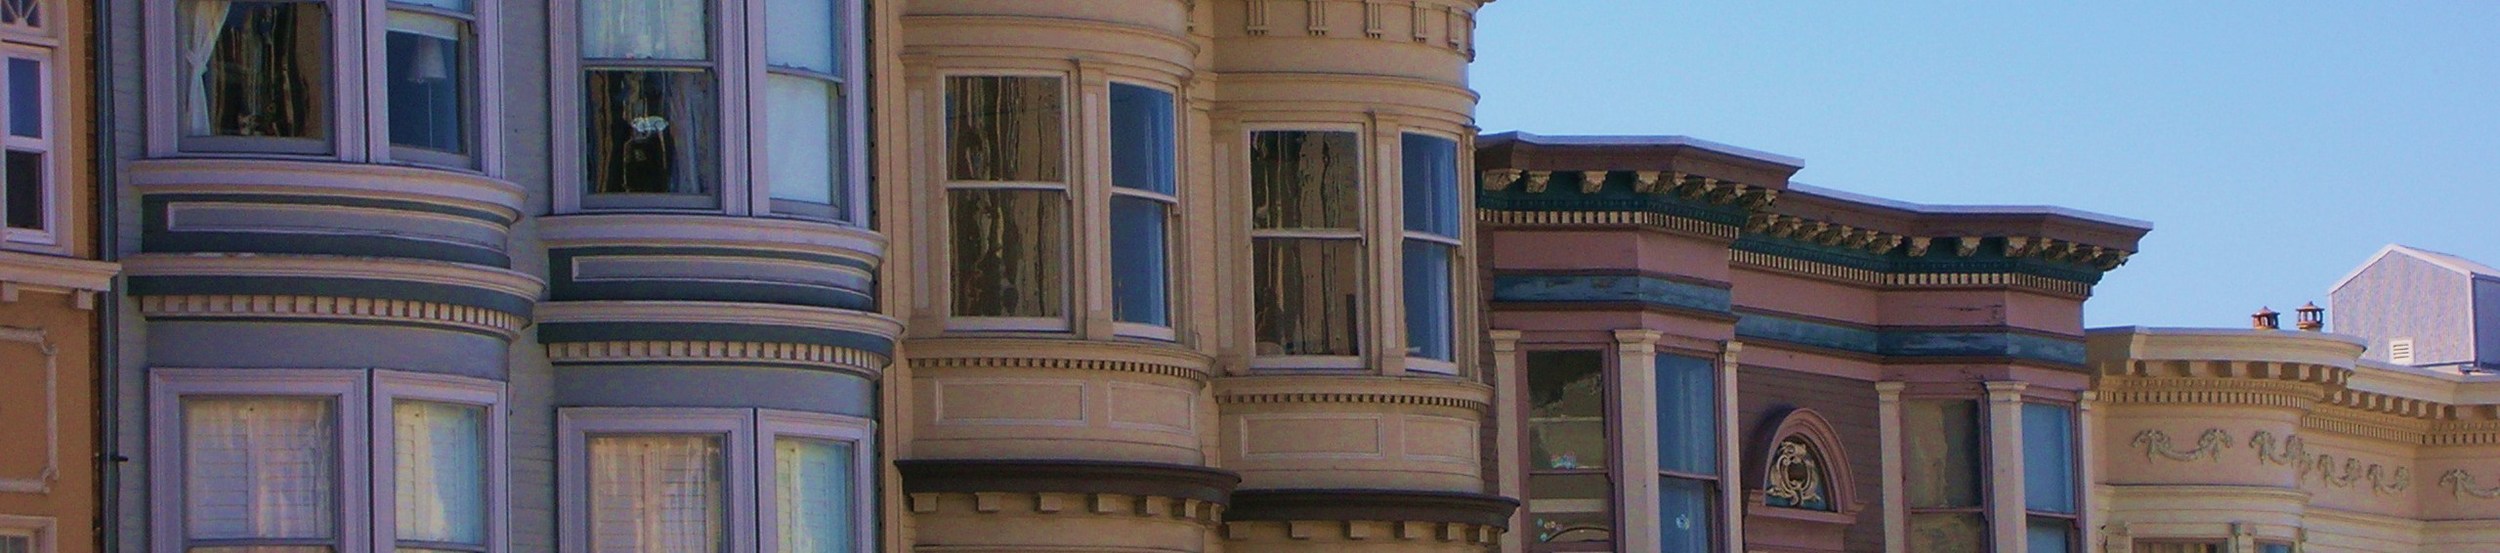 12 San Francisco Townhouses.jpg